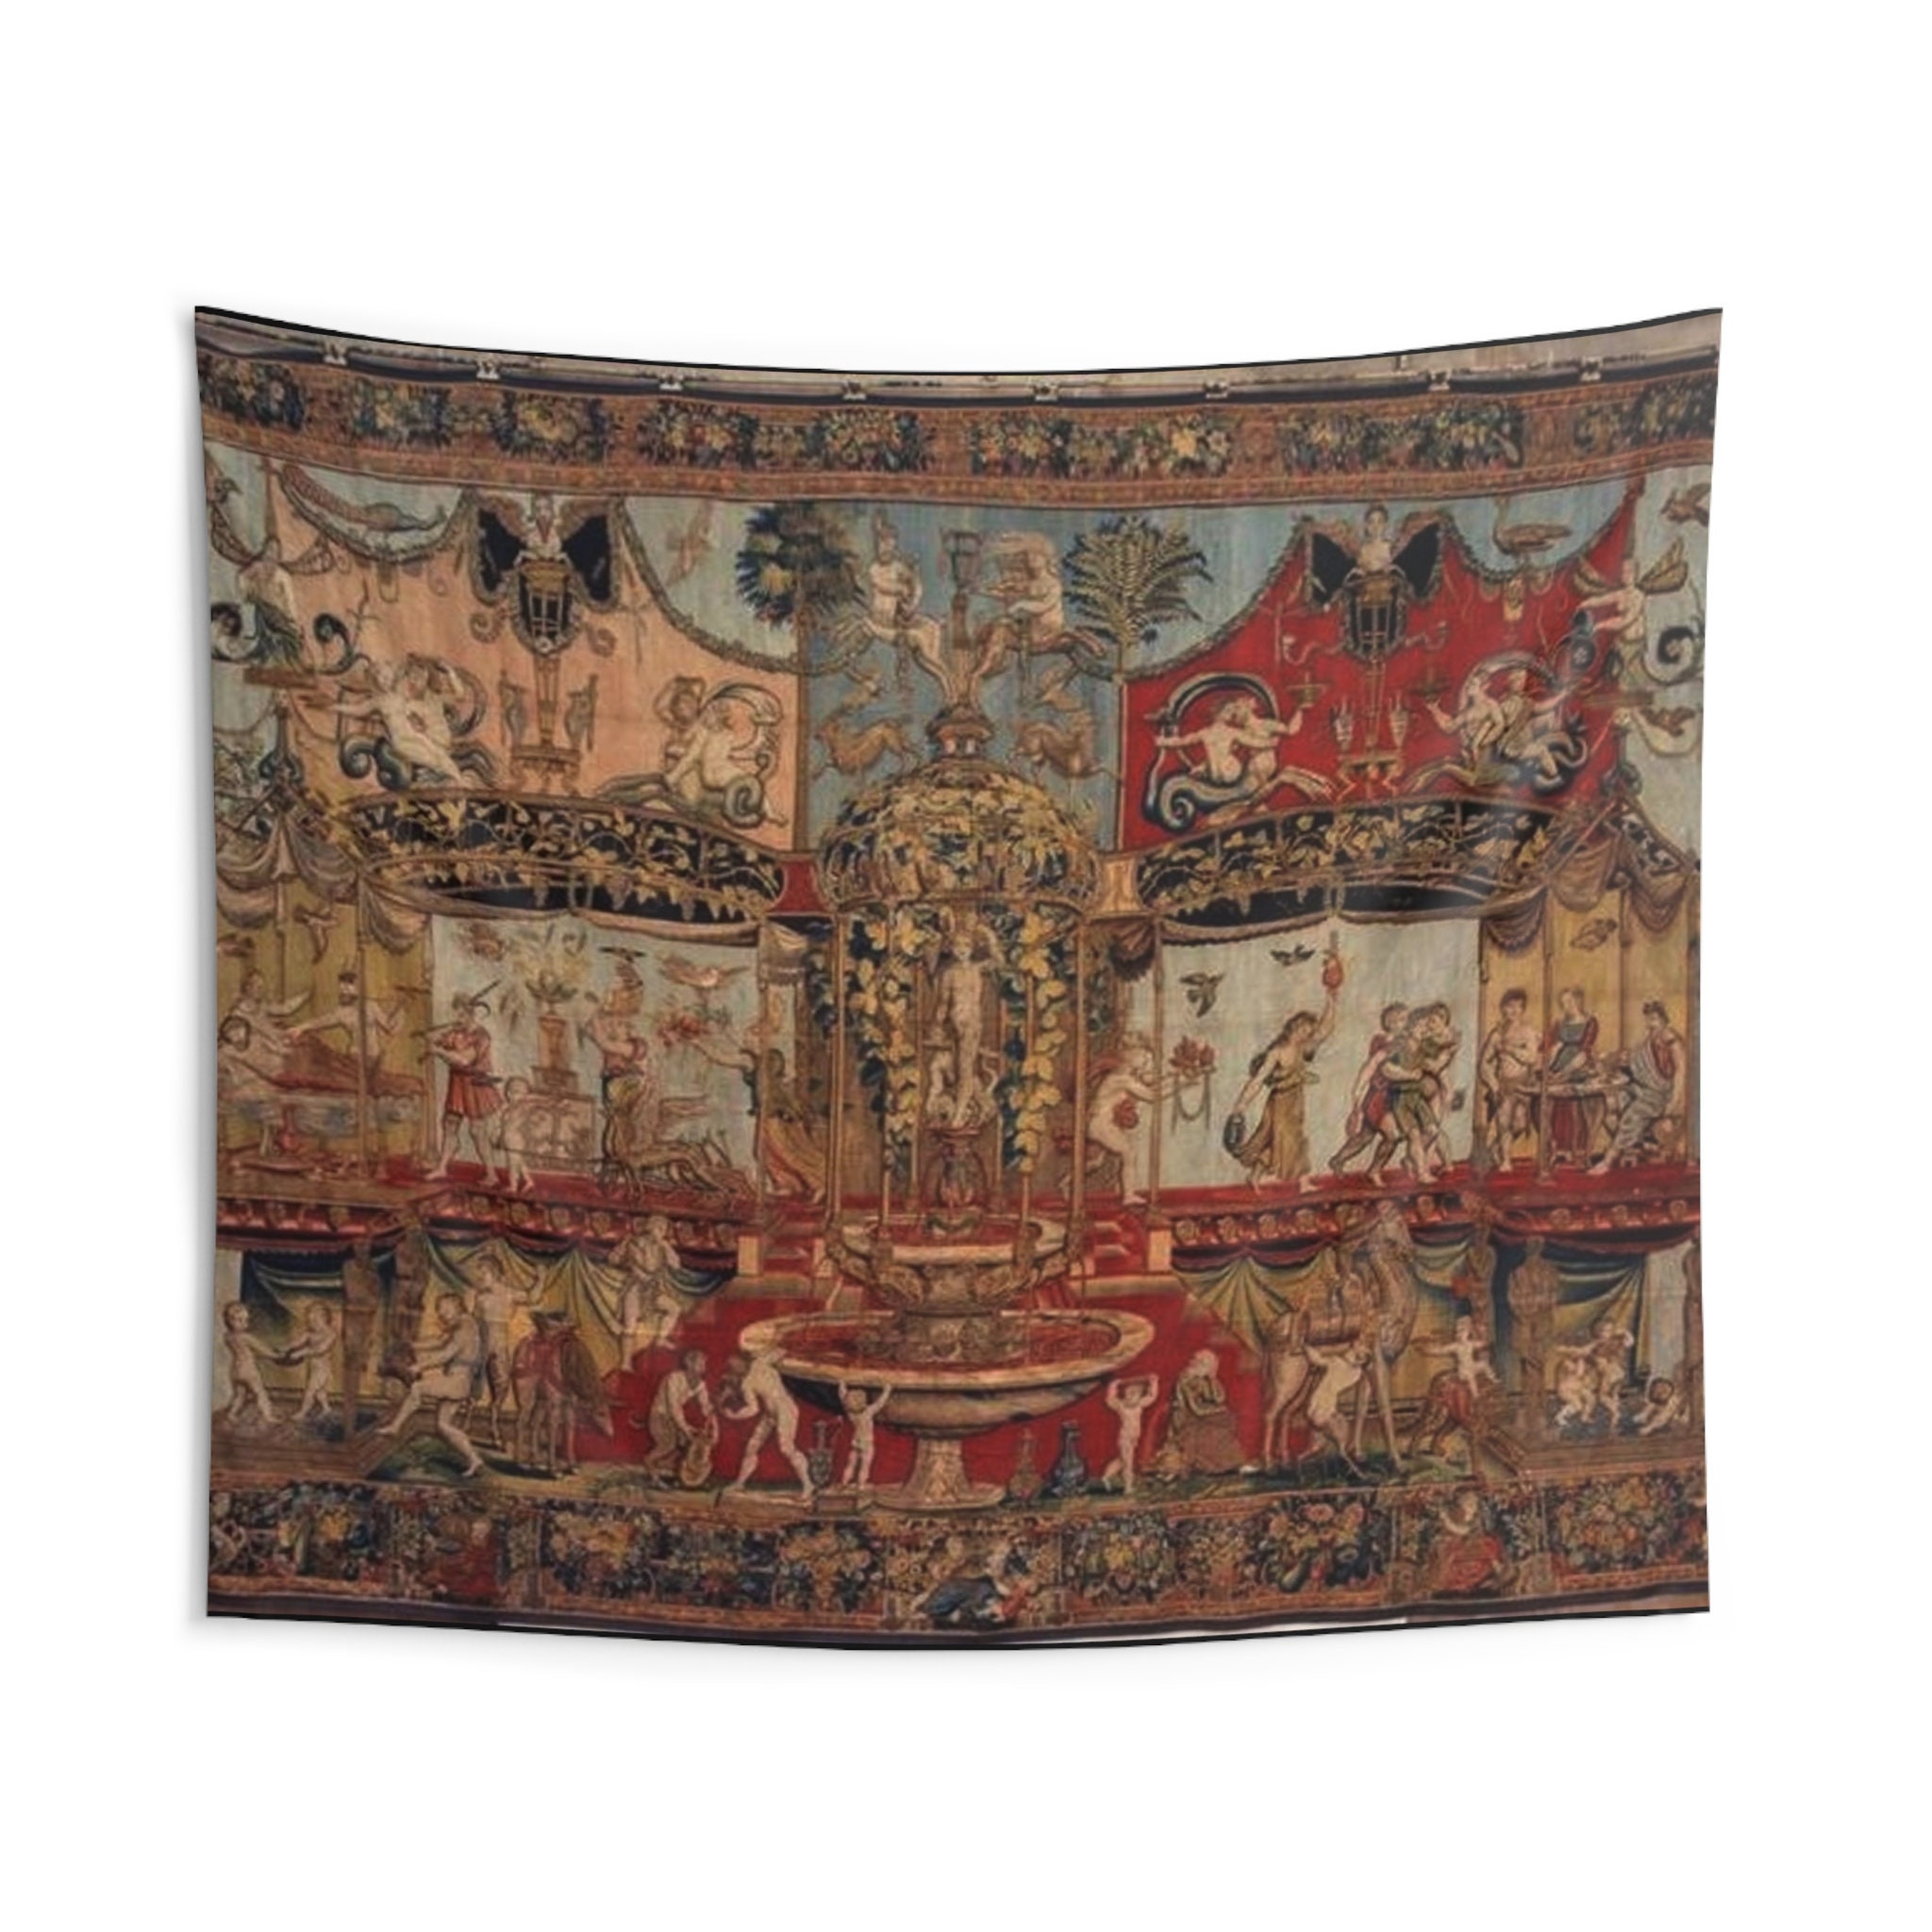 Vintage Tapestry Lace-up Corset Belt, “Forest Scene” pattern